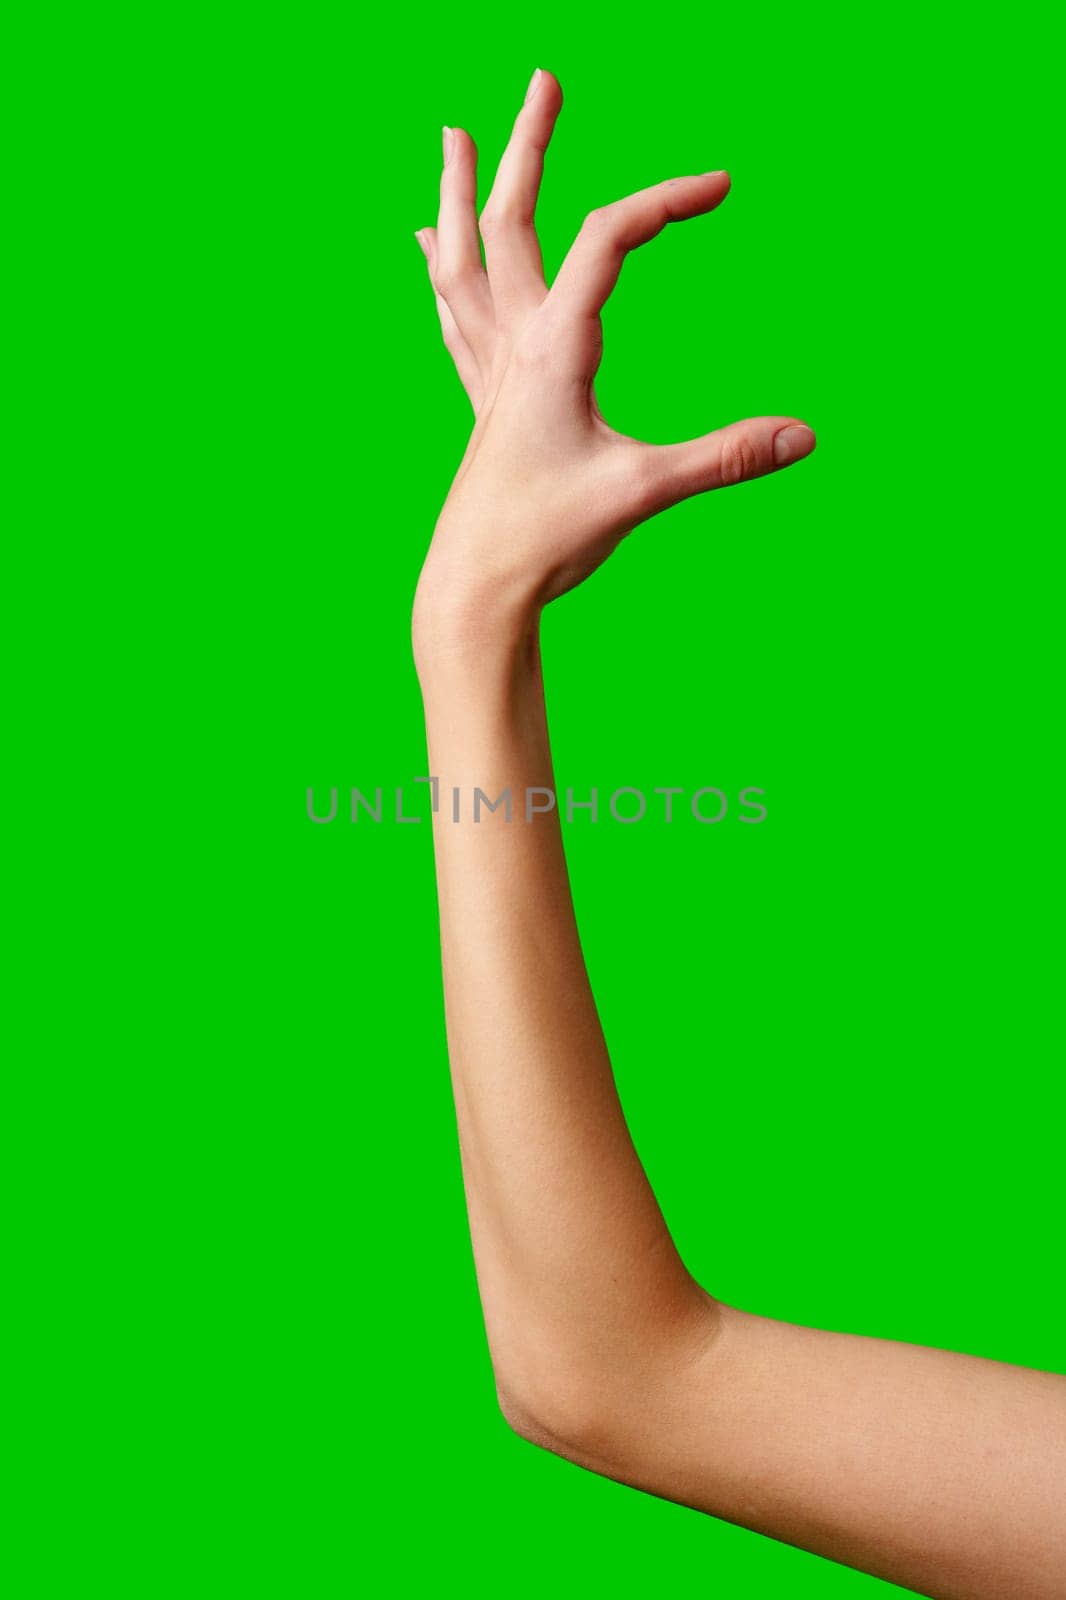 A womans hand extends upward into the air, fingers outstretched, reaching upward towards an unseen destination. by Fabrikasimf